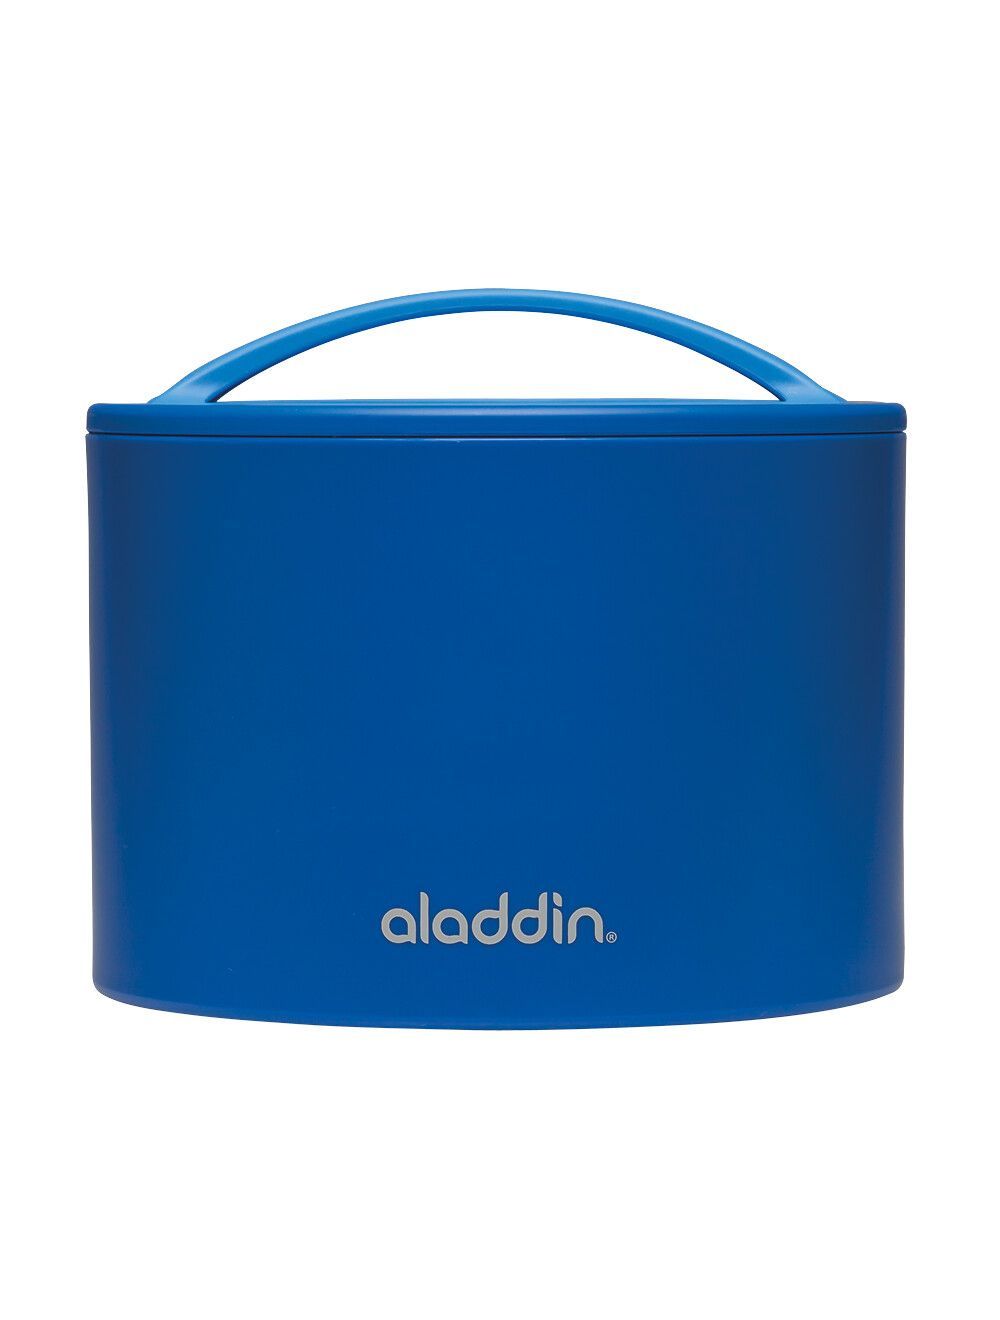 Aladdin Bento Lunch Box 0.6L Blue-10-01134-052